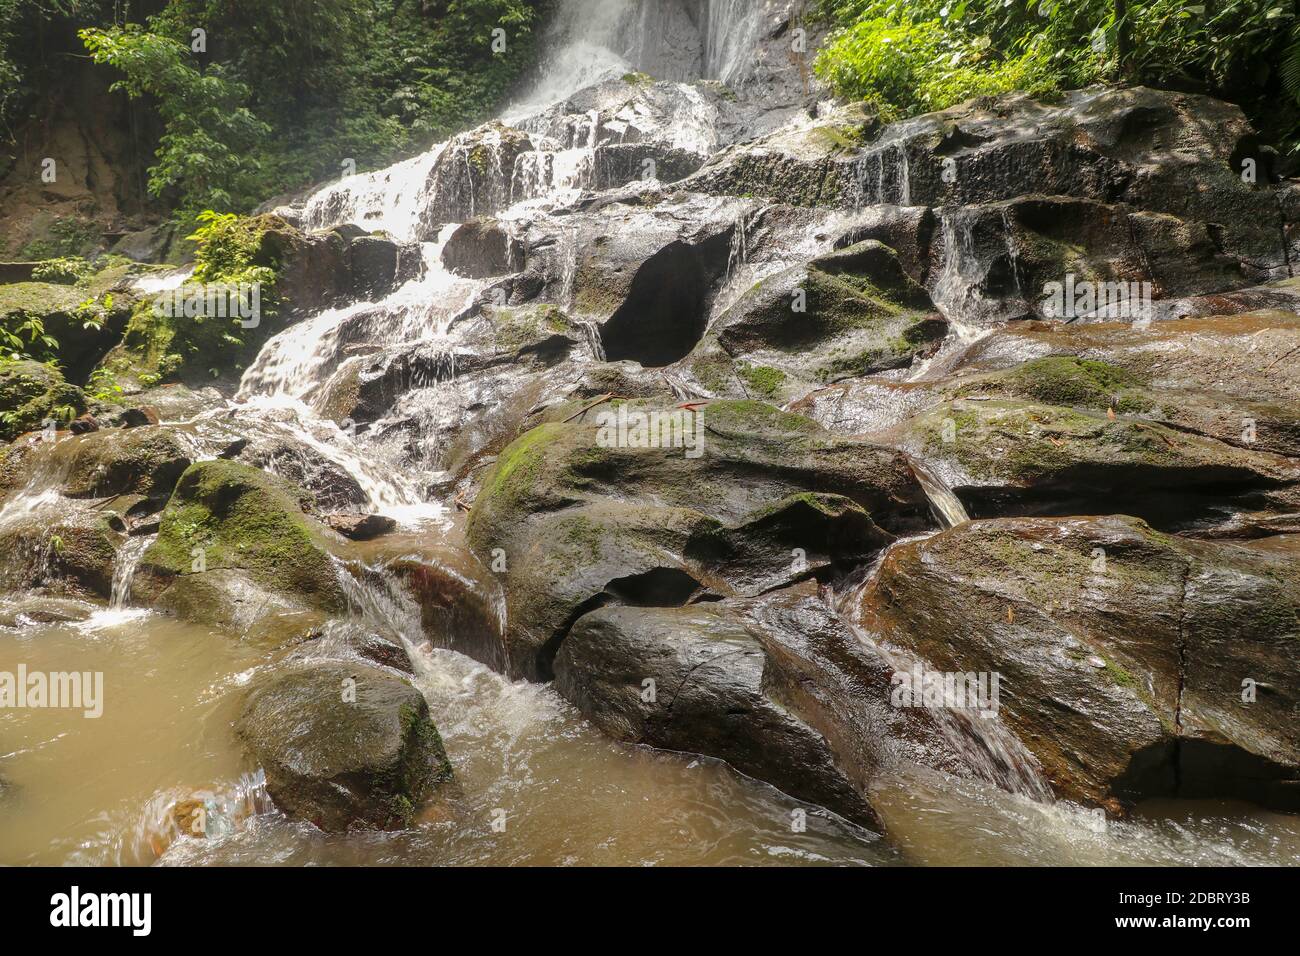 Scenic cascade Goa Giri Campuhan waterfall in tropical jungle in Bali, Indonesia. Amazing and beautiful hidden Waterfall in Paradise. Stock Photo